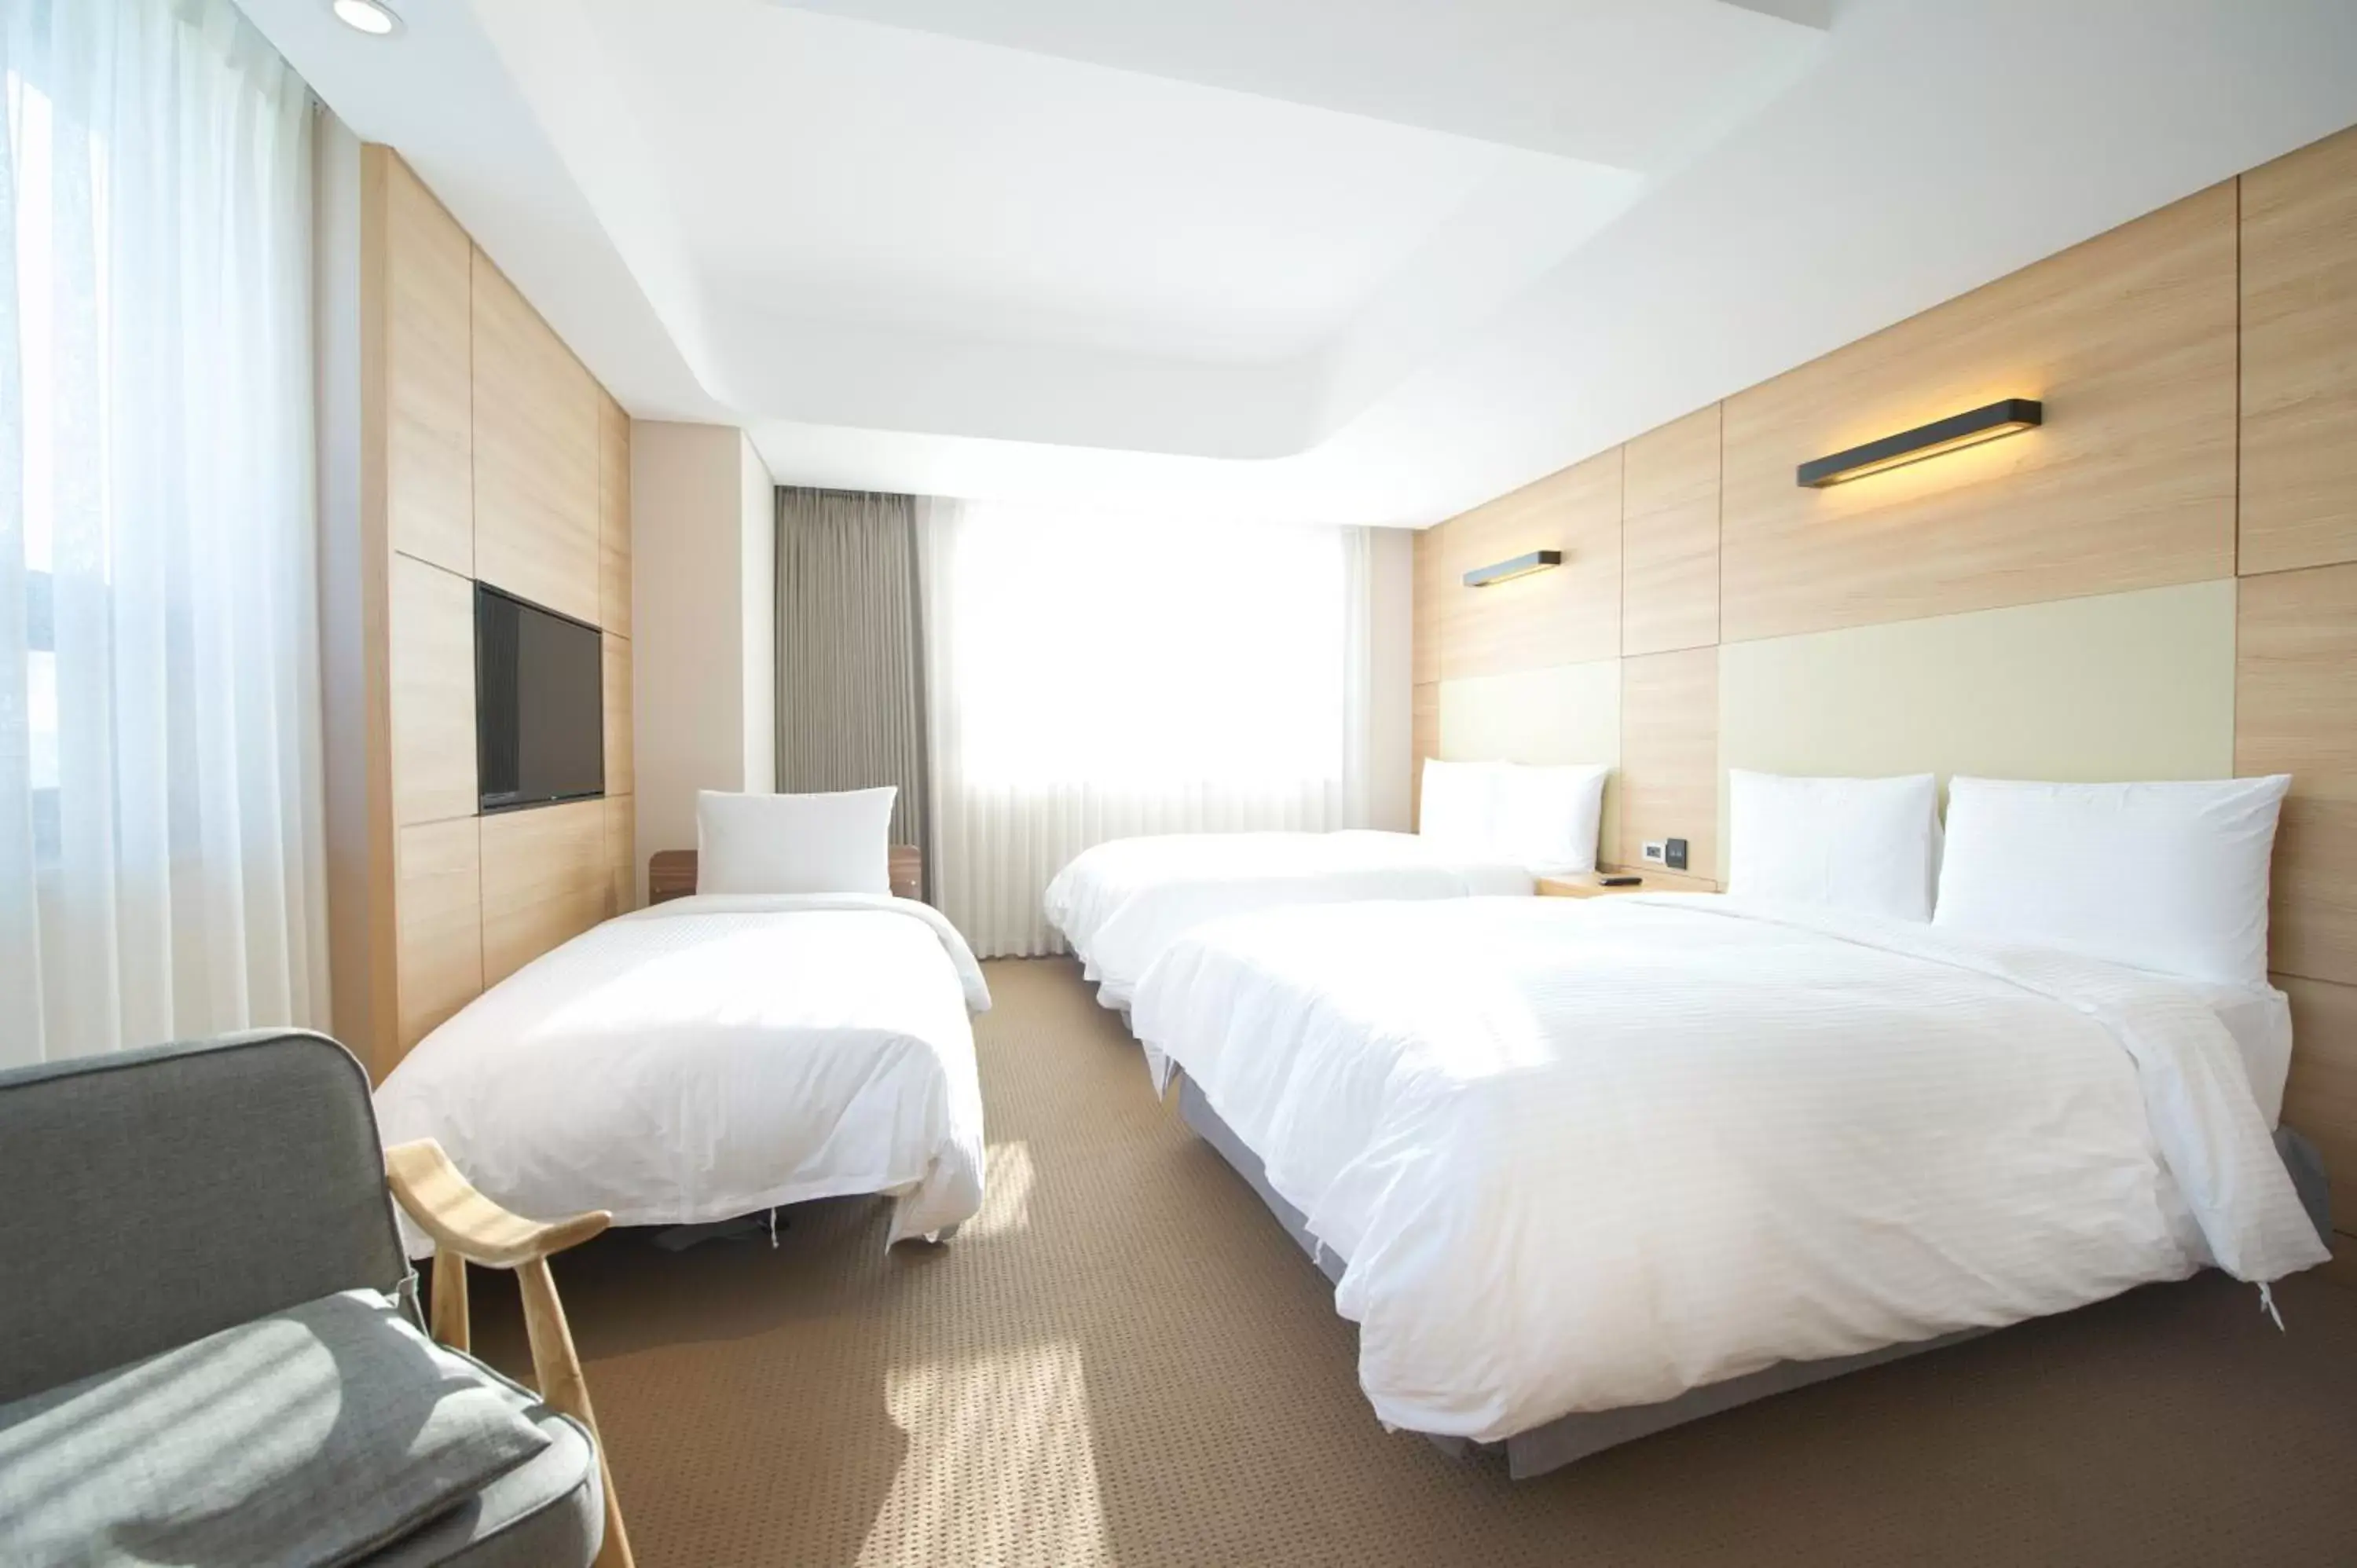 Bed, Room Photo in Acube Hotel Dongdaemun